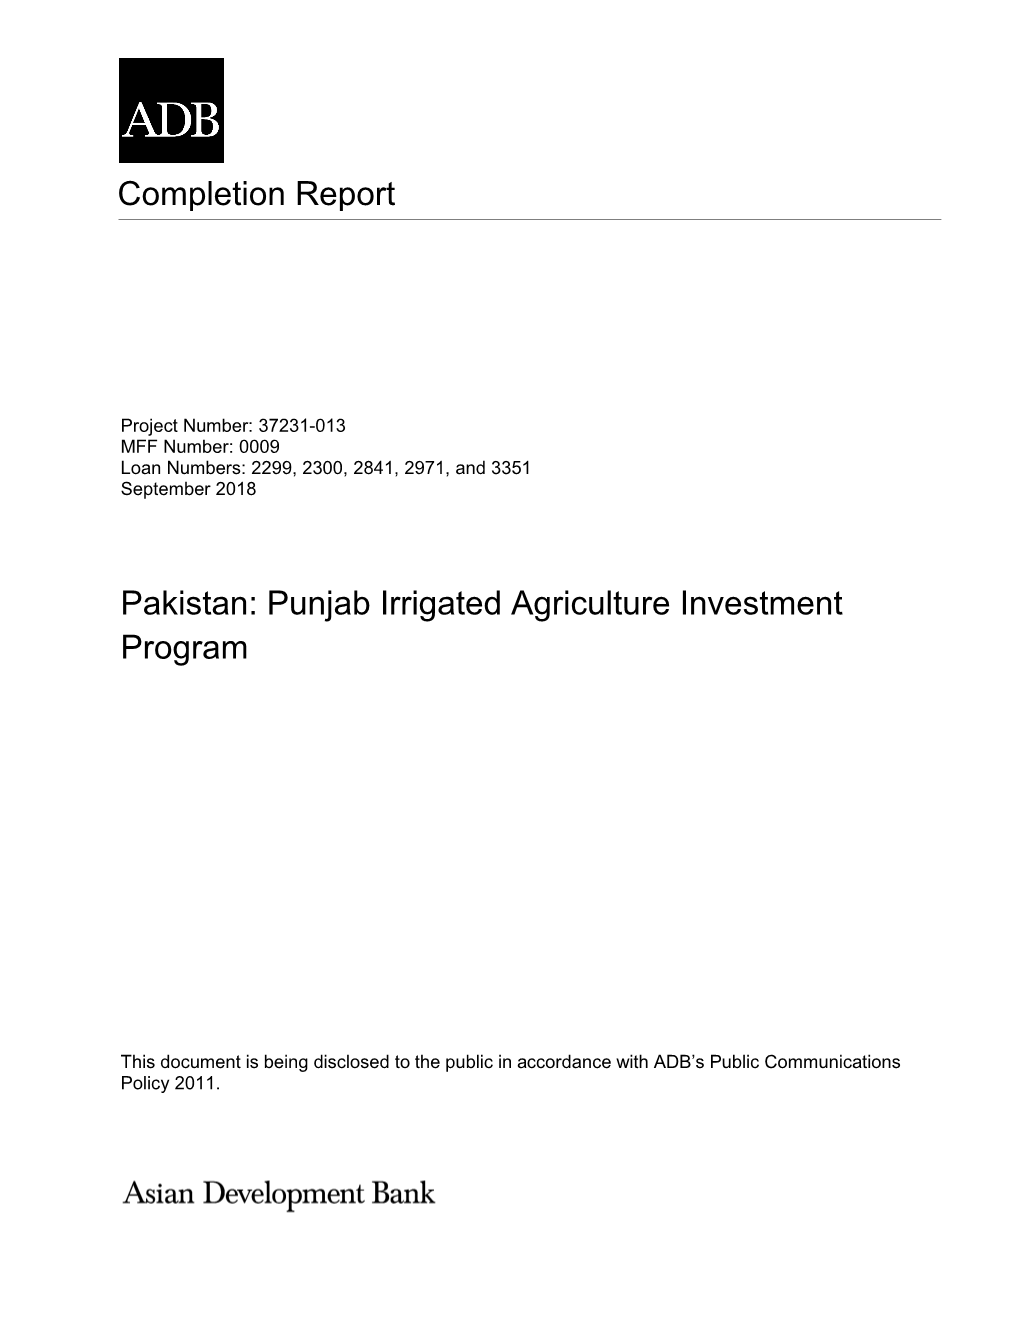 37231-013: Punjab Irrigated Agriculture Investment Program